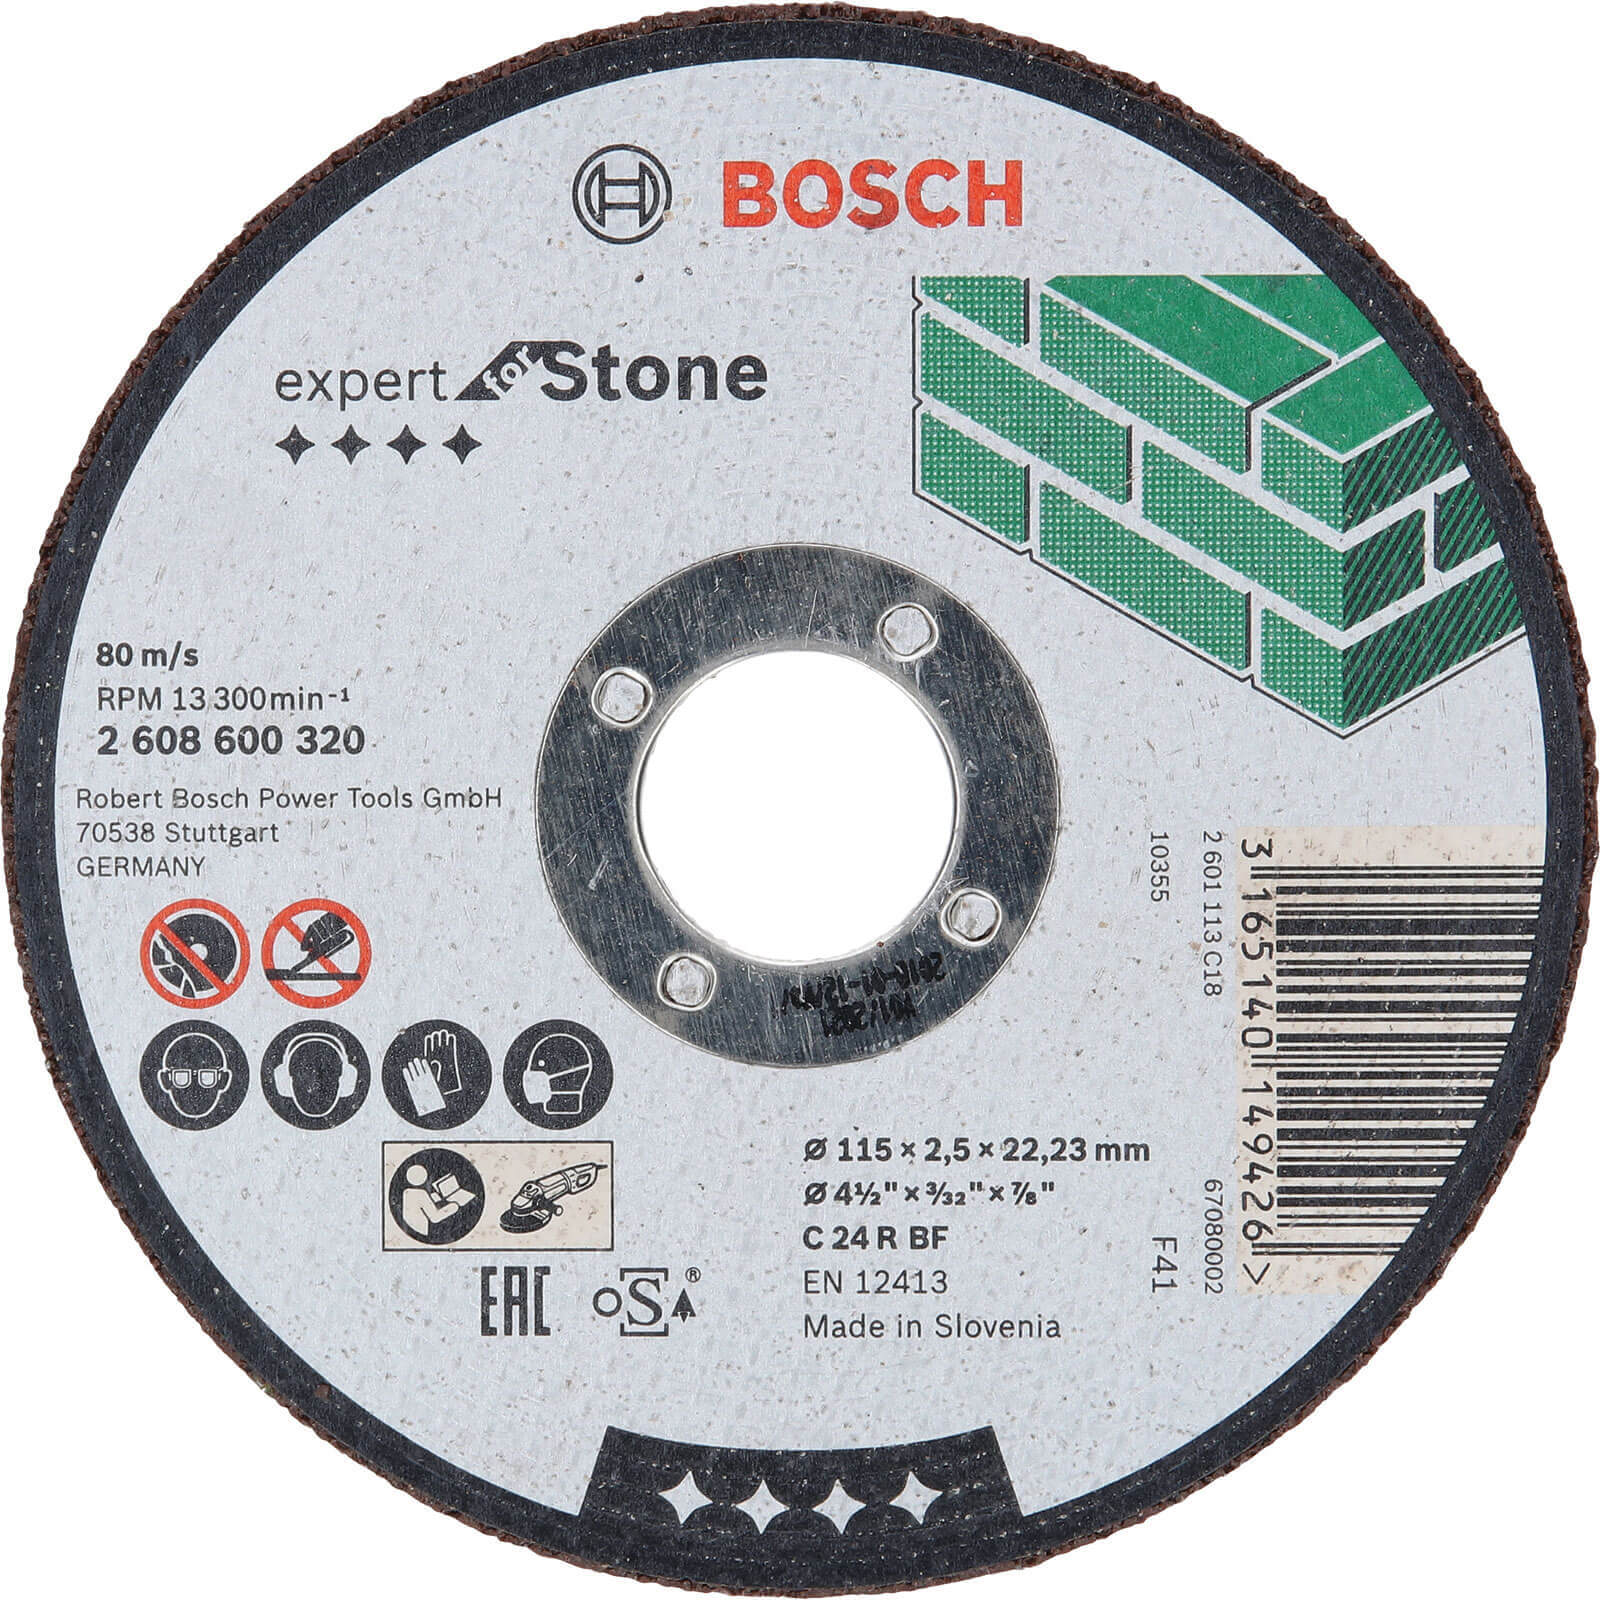 Image of Bosch C24R BF Flat Stone Cutting Disc 115mm